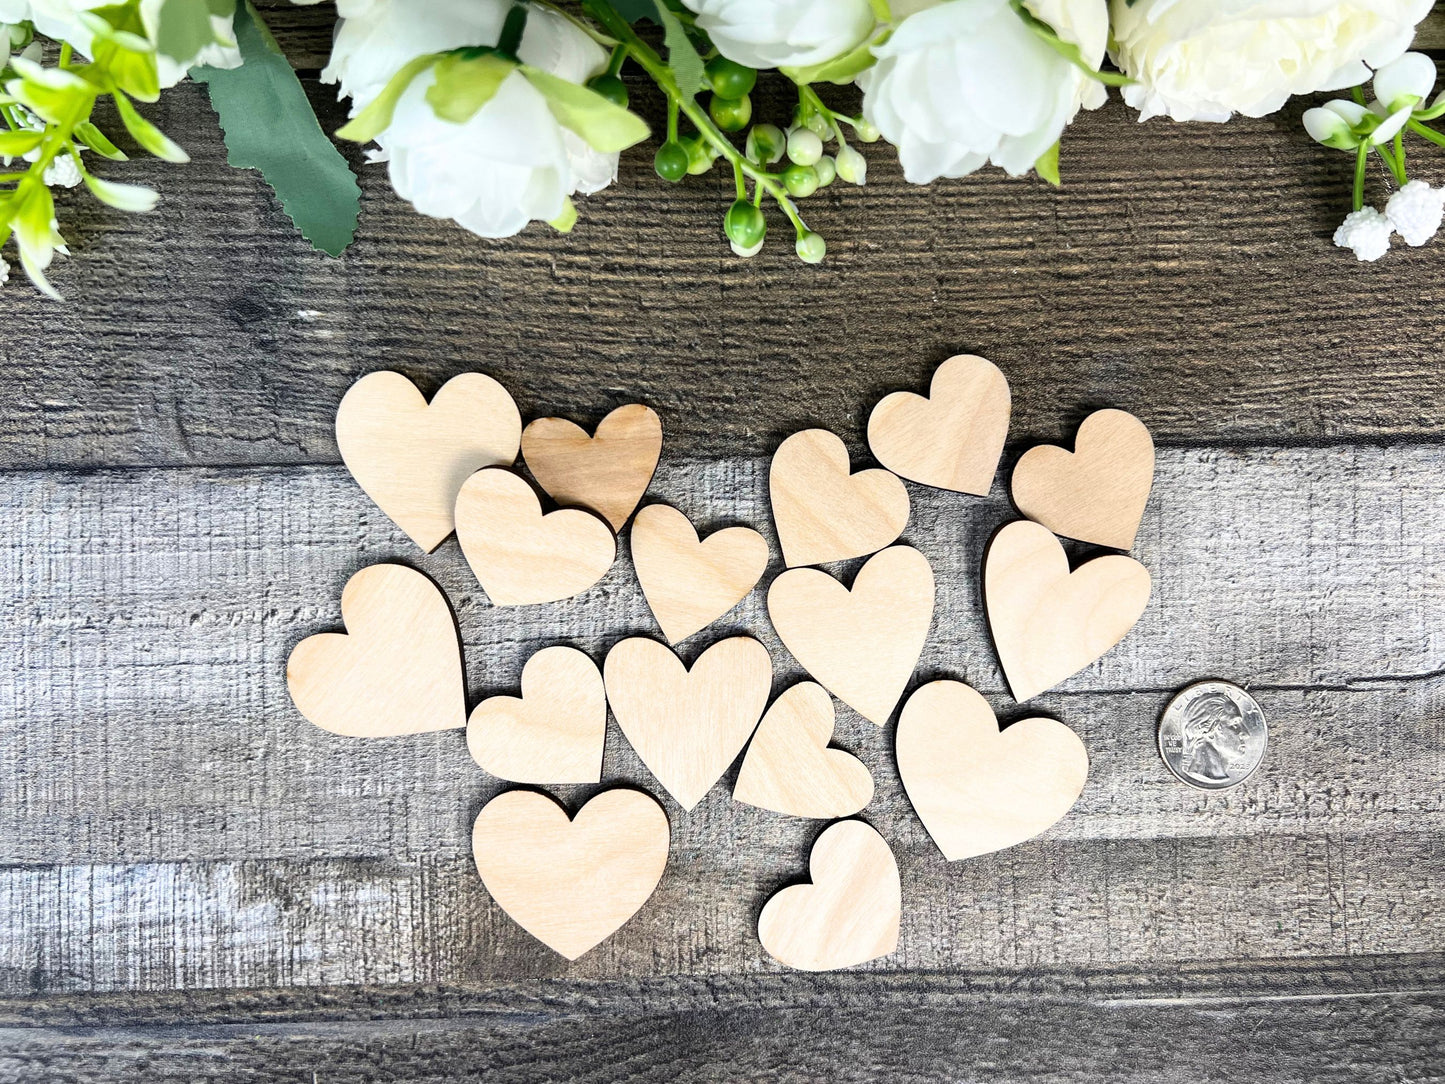 Wooden Heart Embellishments | DIY Crafting Home Decor Wood Cutouts